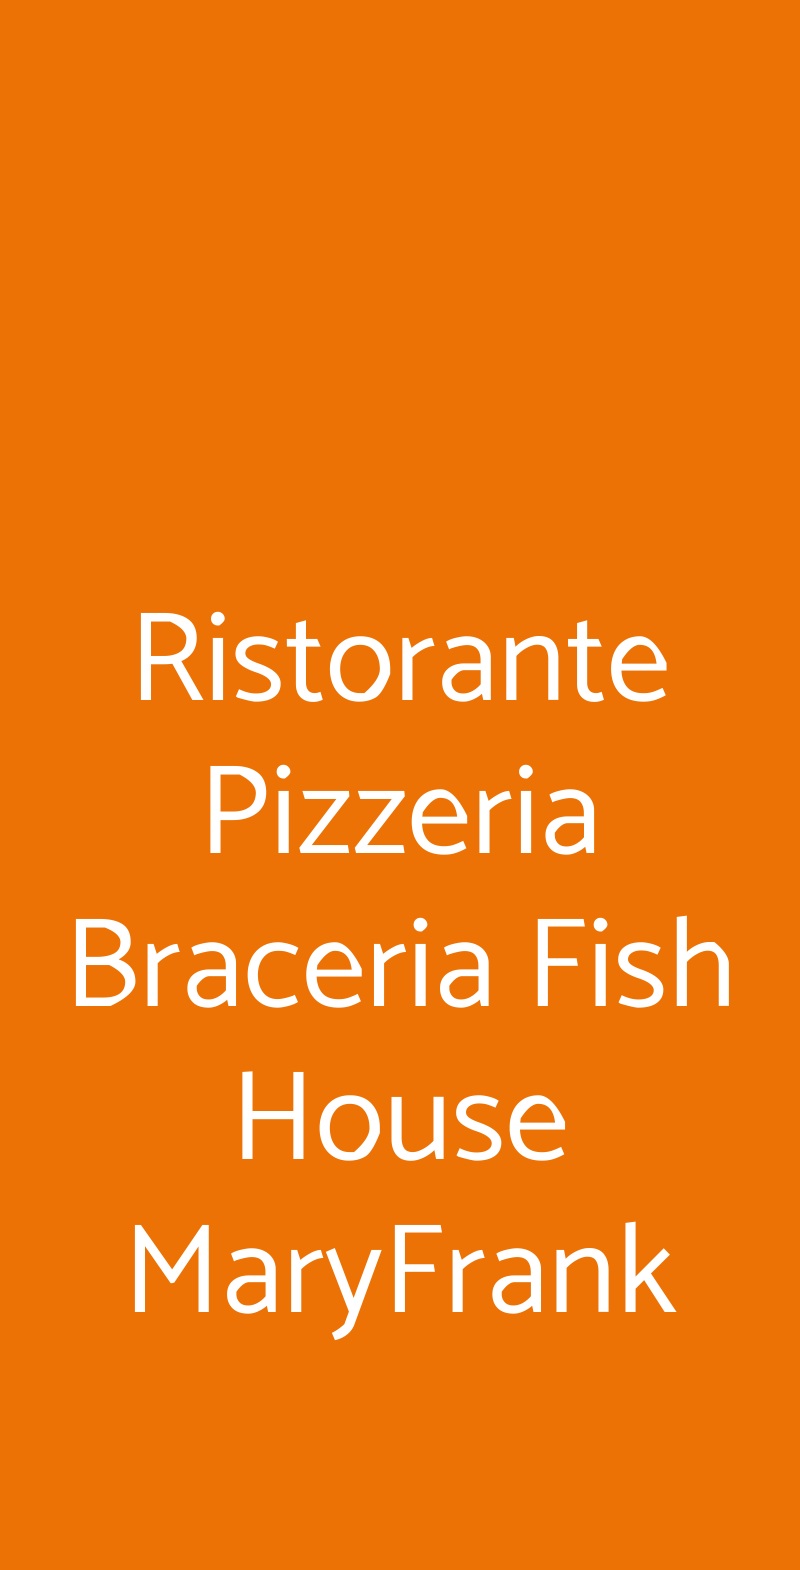 Ristorante Pizzeria Braceria Fish House MaryFrank Lucca menù 1 pagina